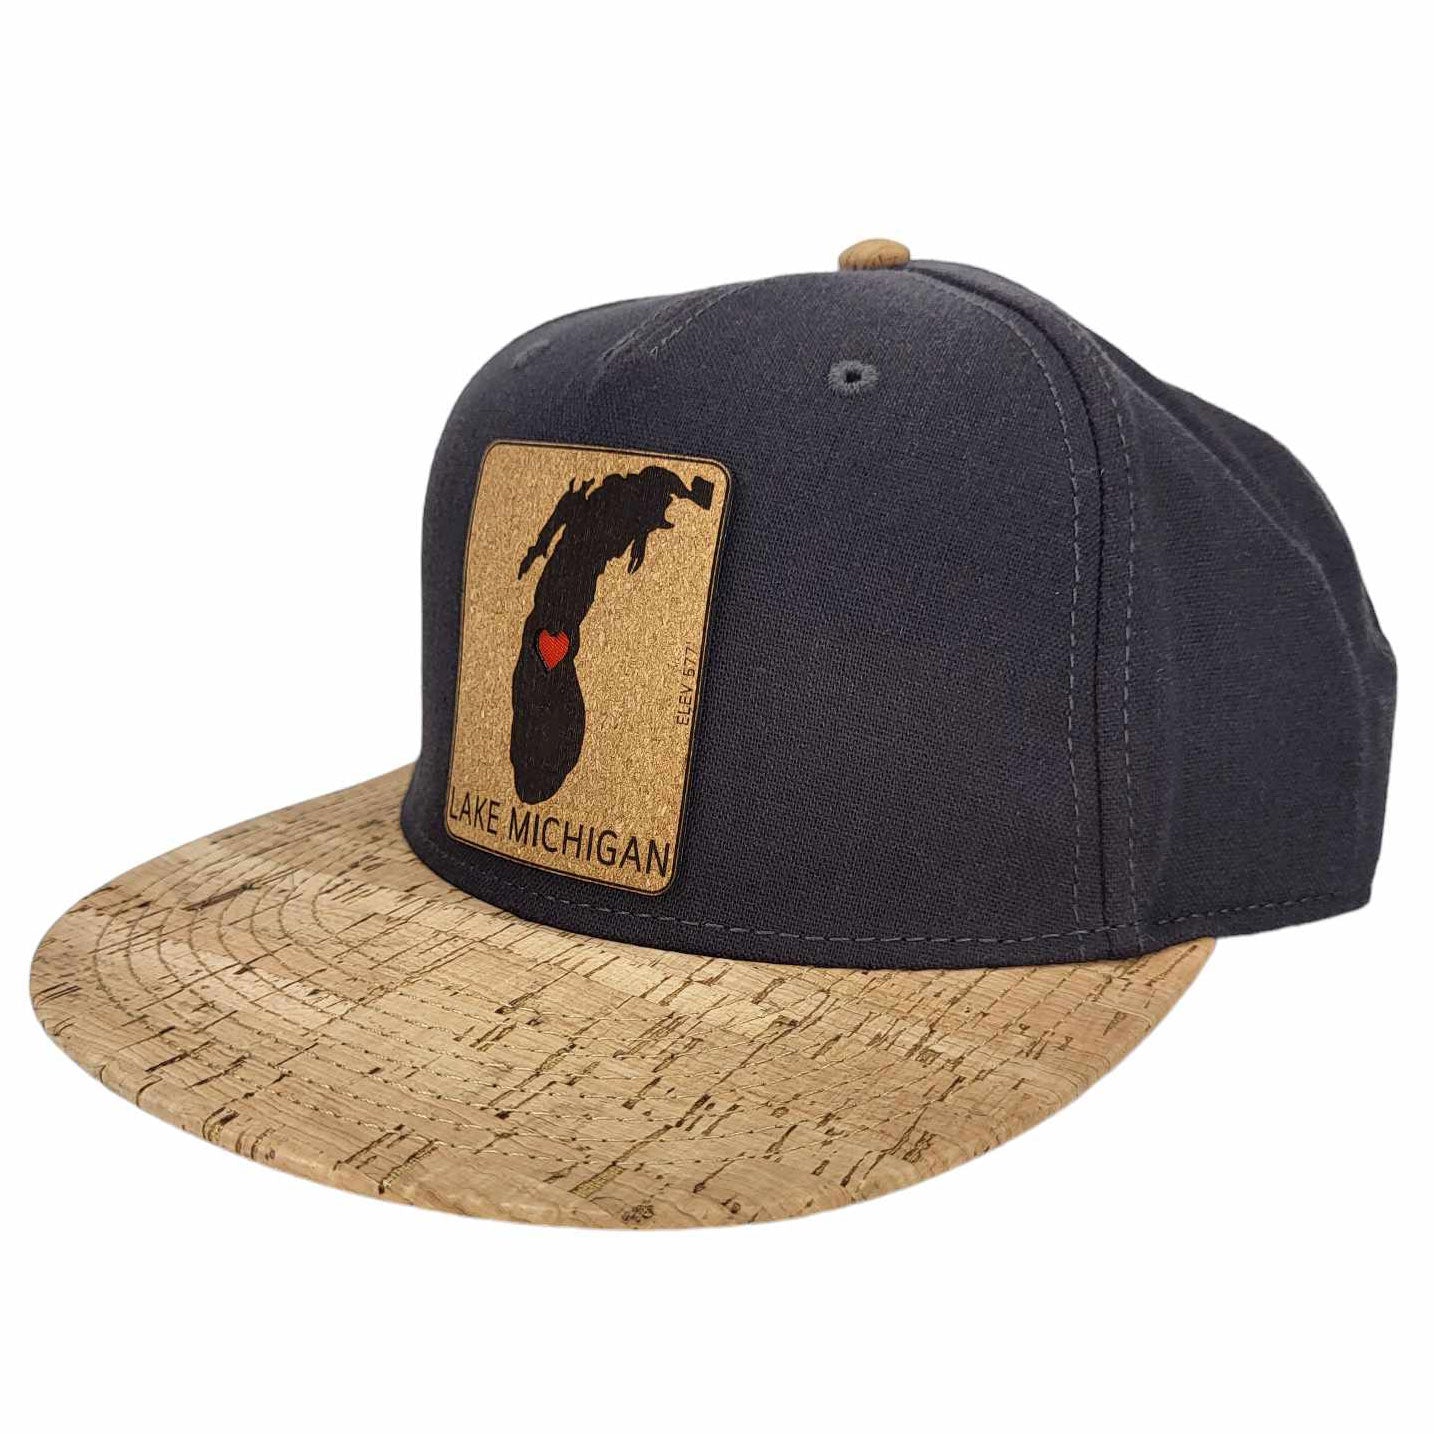 The Lake Michigan Cork Hat